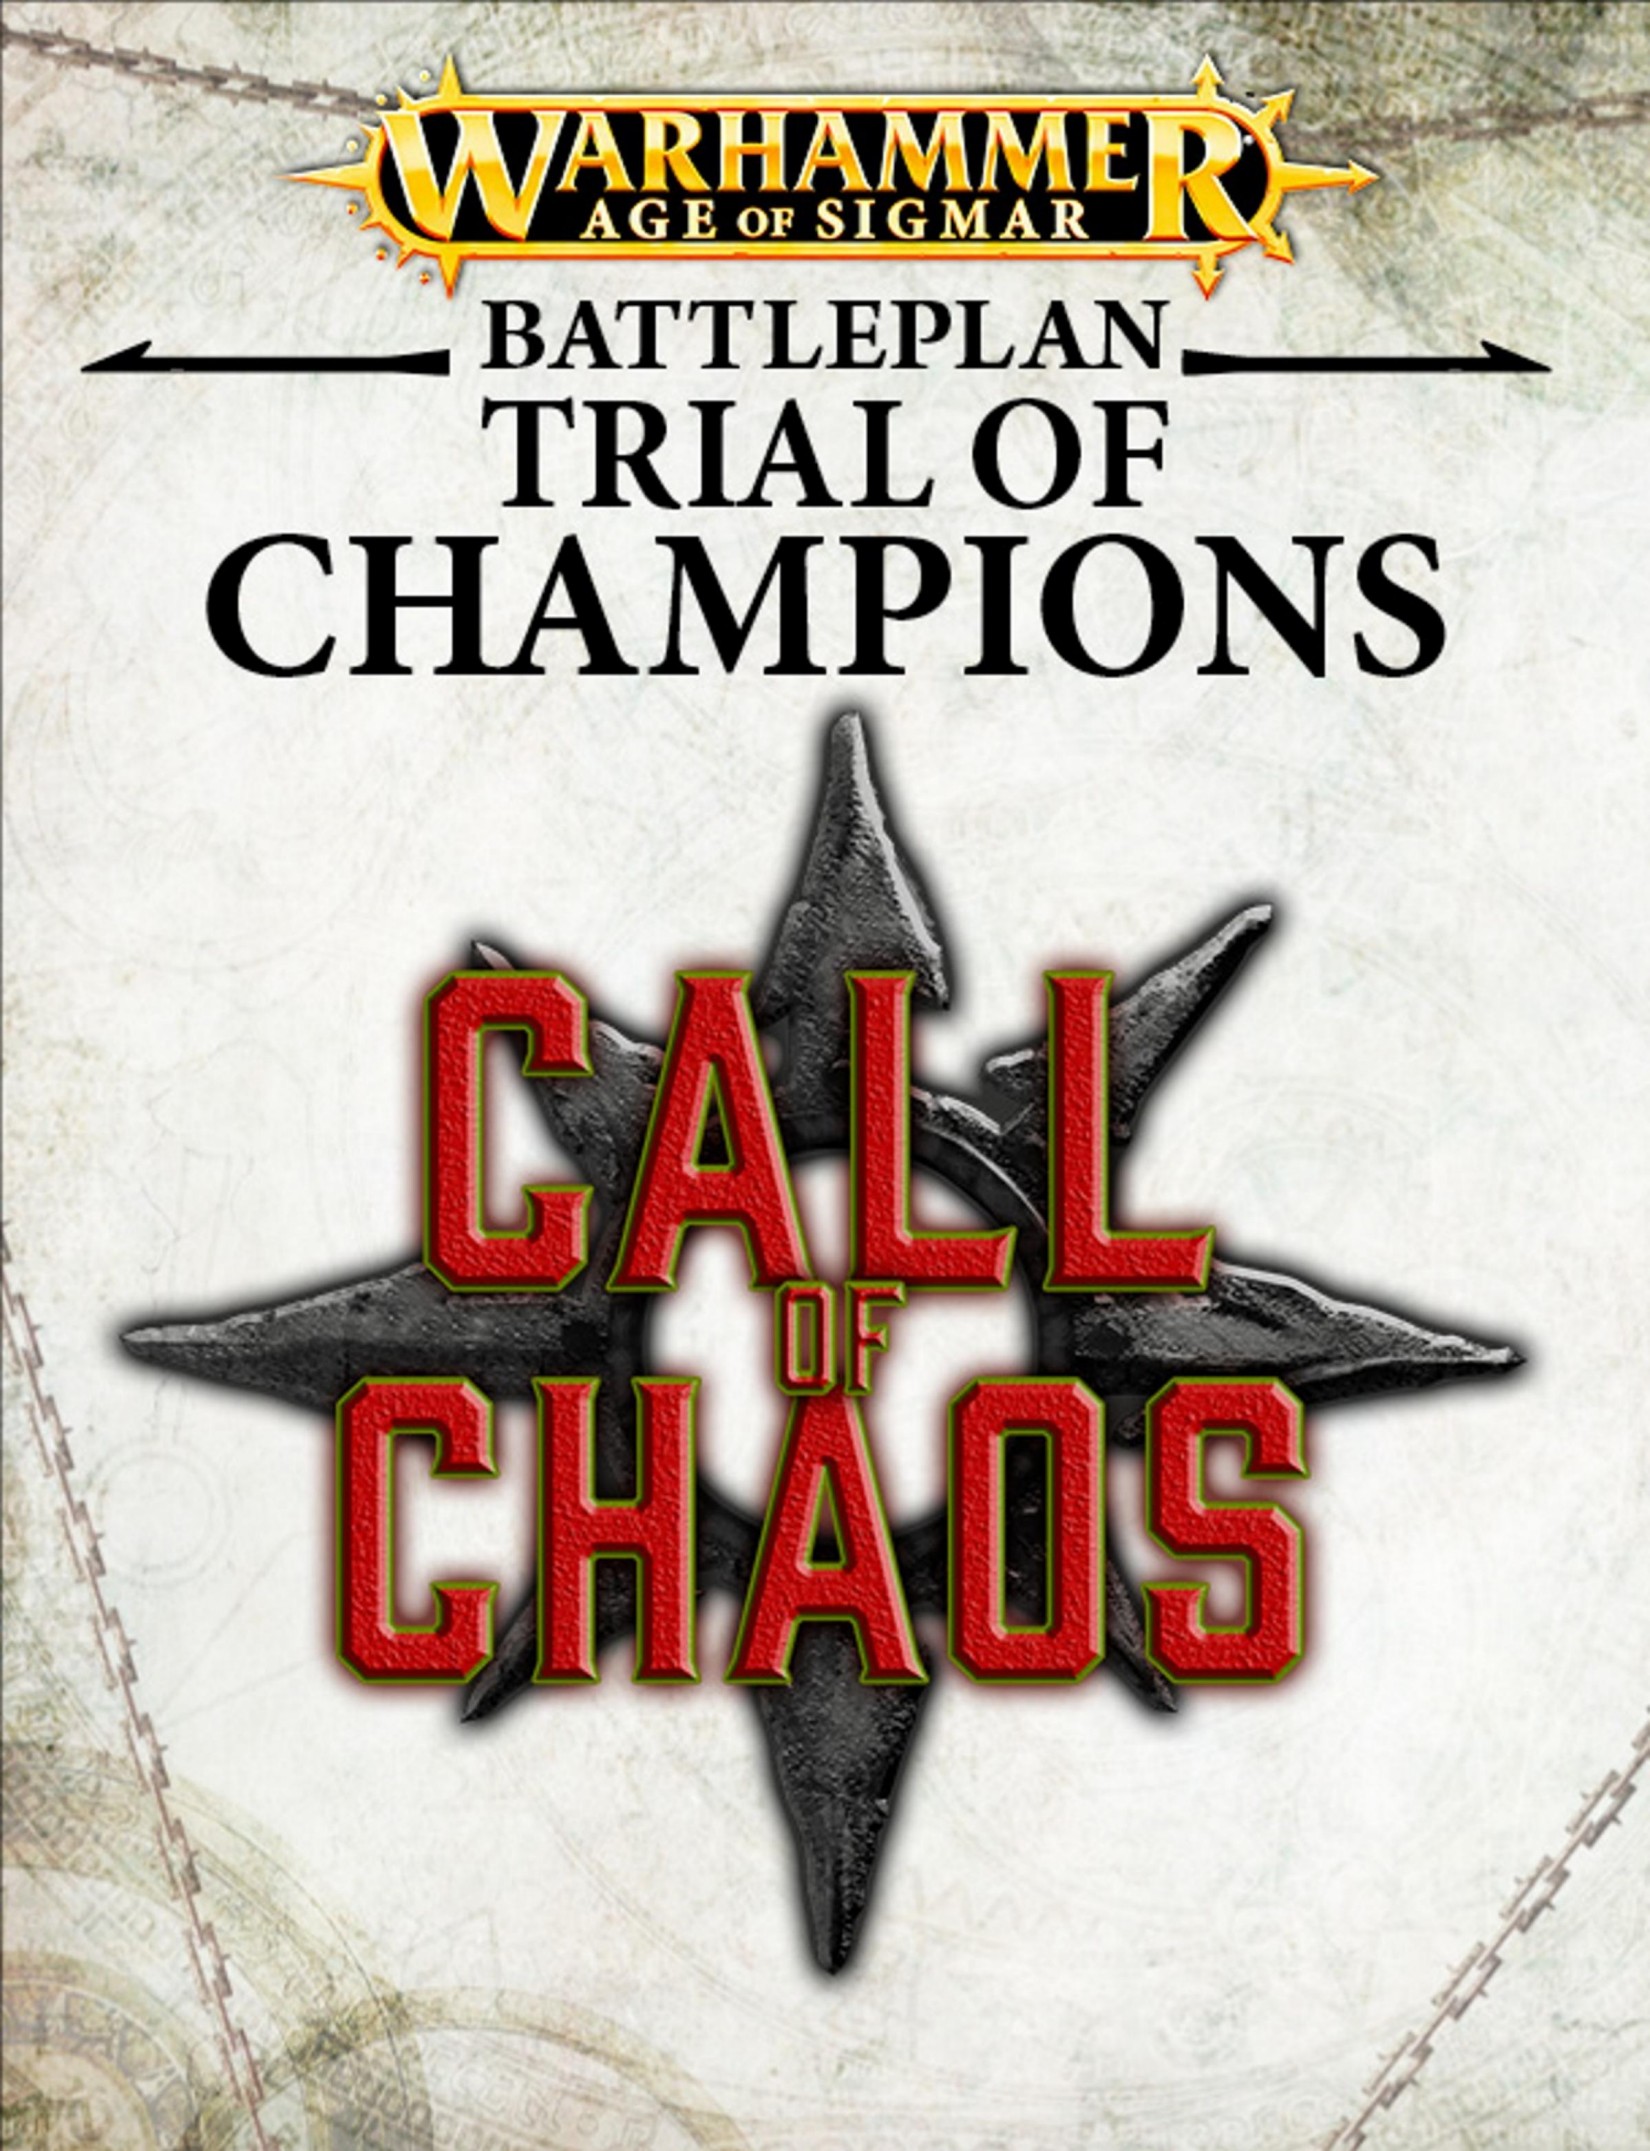 Warhammer: Age of Sigmar - Battleplan - Trial of Champions